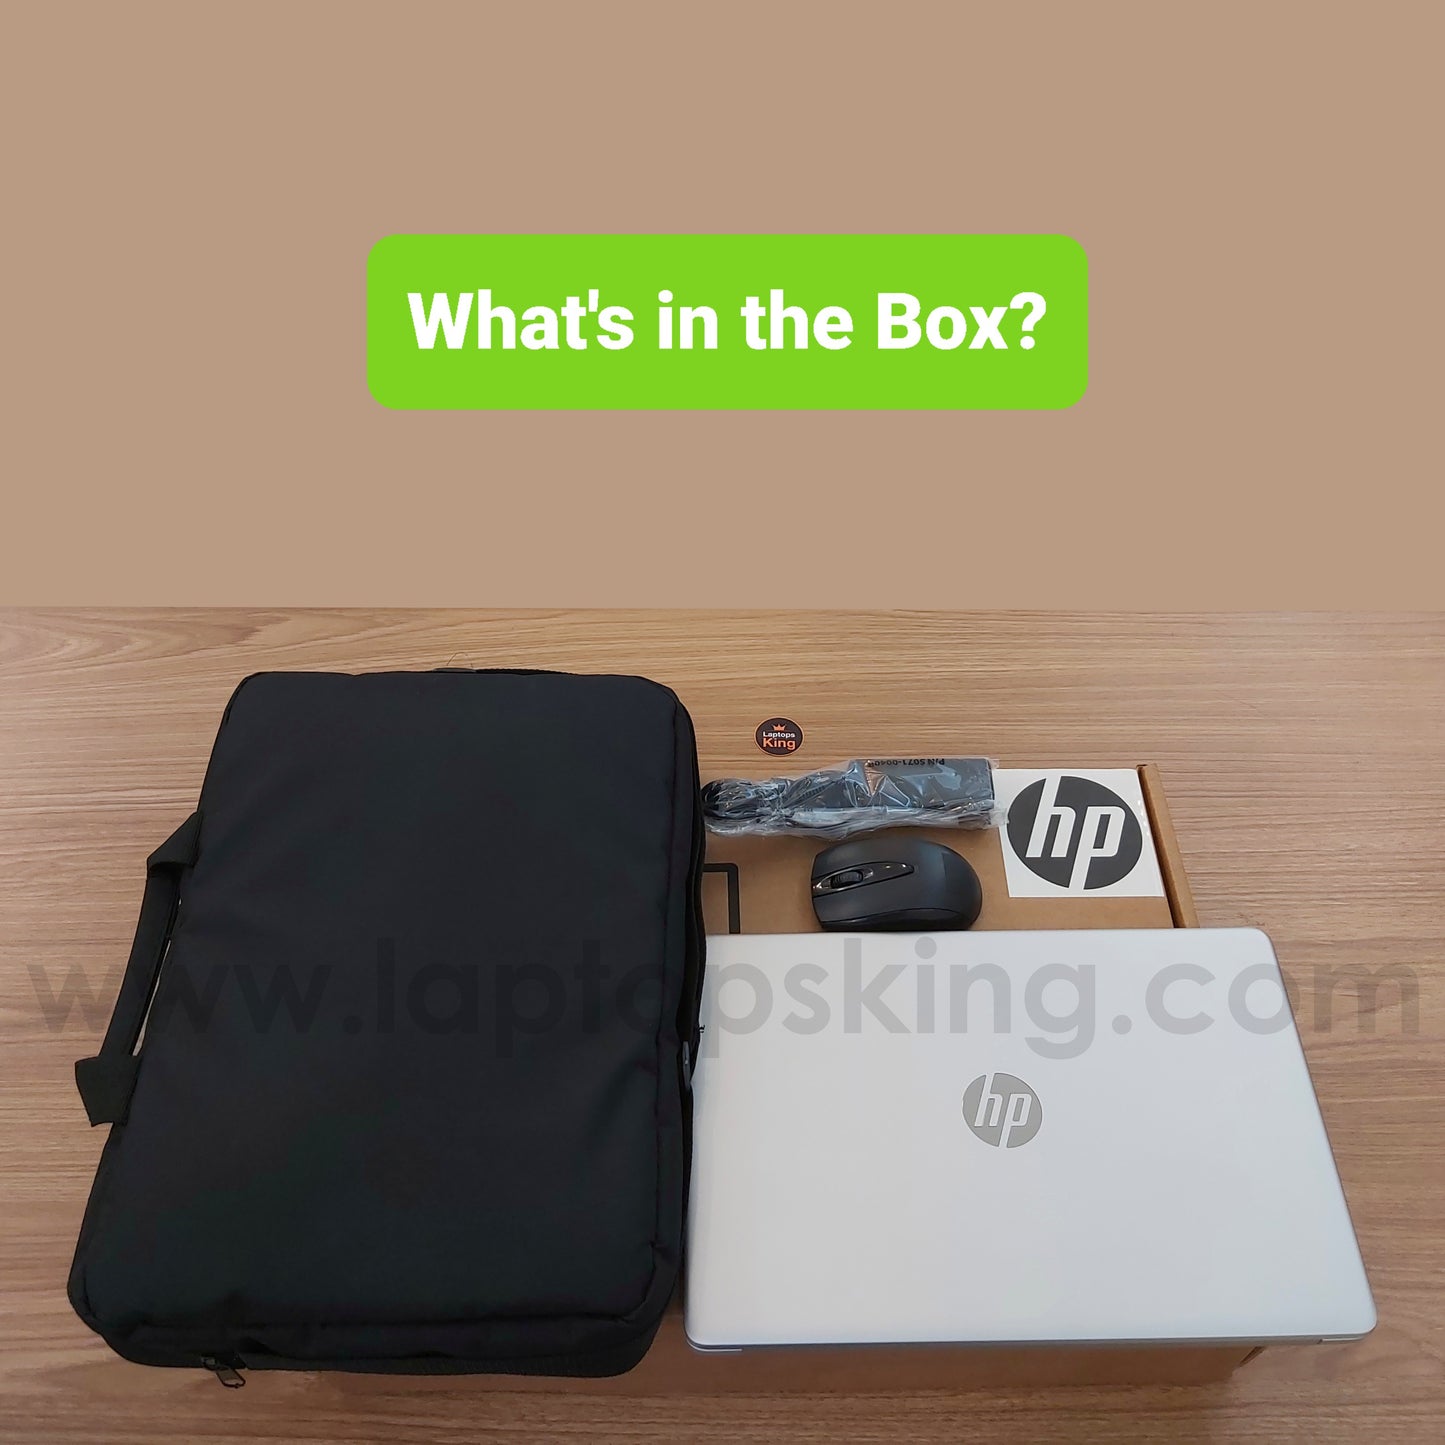 HP 15-DY1 i7-1065G7 Iris Plus Laptop Offers (Brand New)